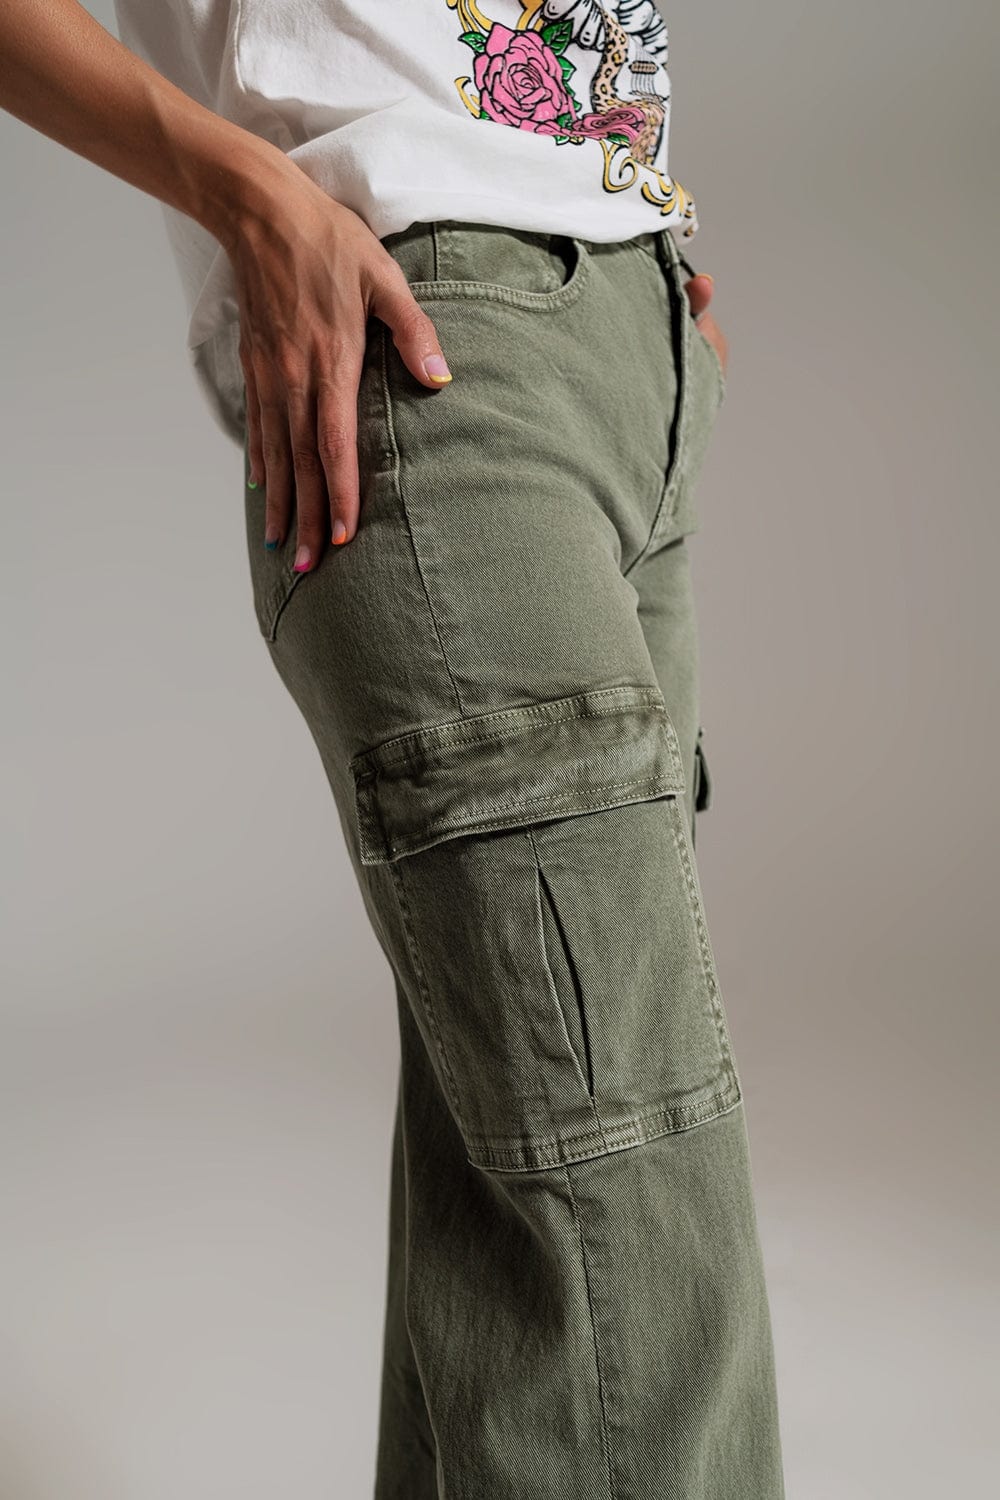 q2 women s pants trousers straight leg cargo jeans in olive green straight leg cargo jeans in olive green